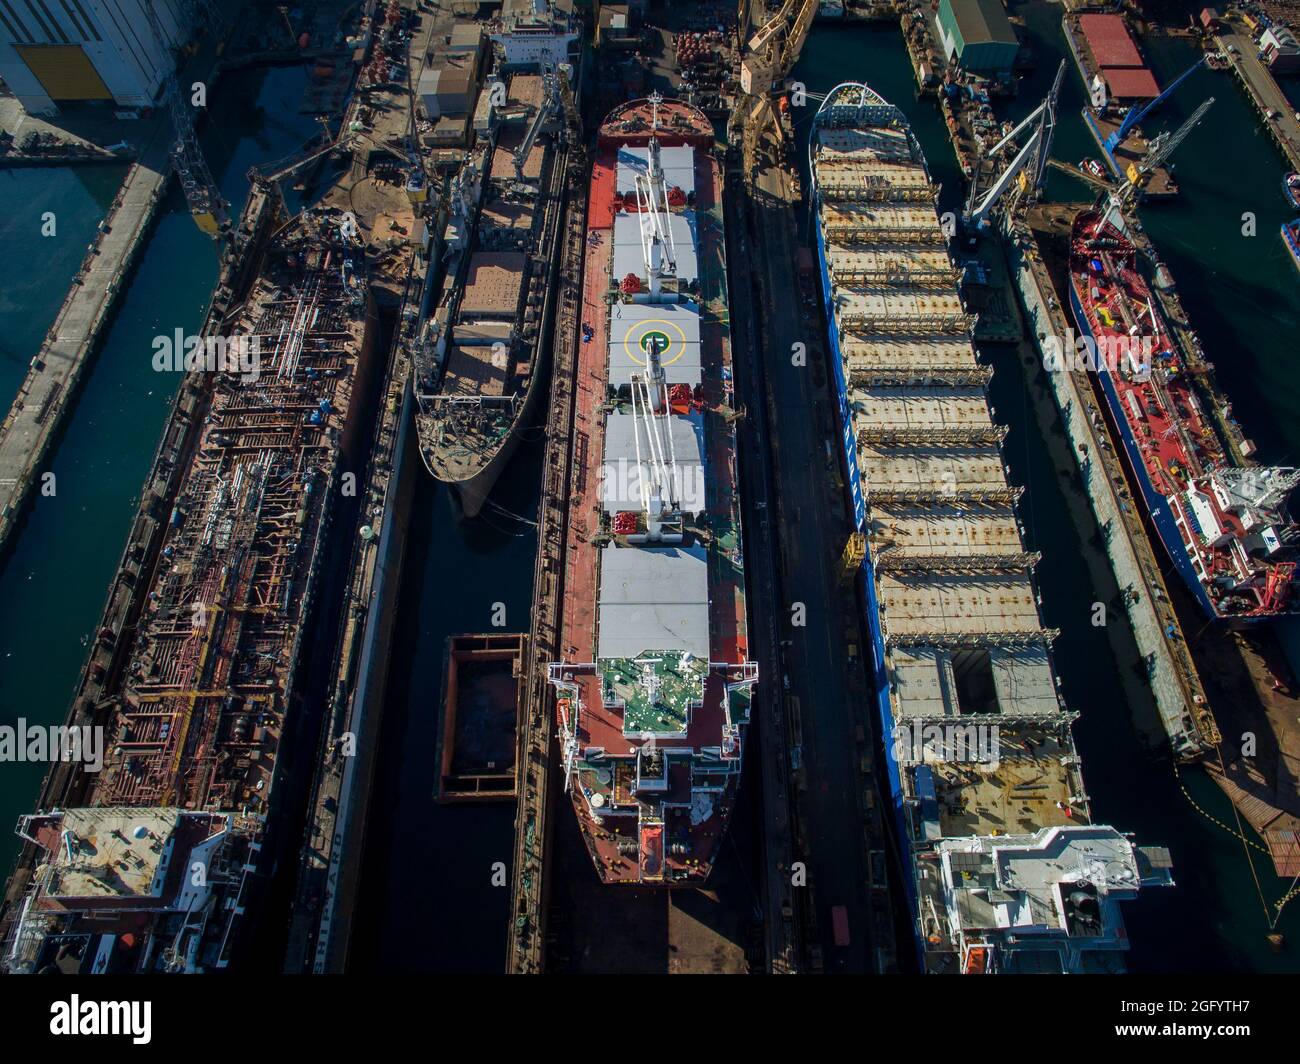 Cargo vessels in shipyard /dry dock Stock Photo